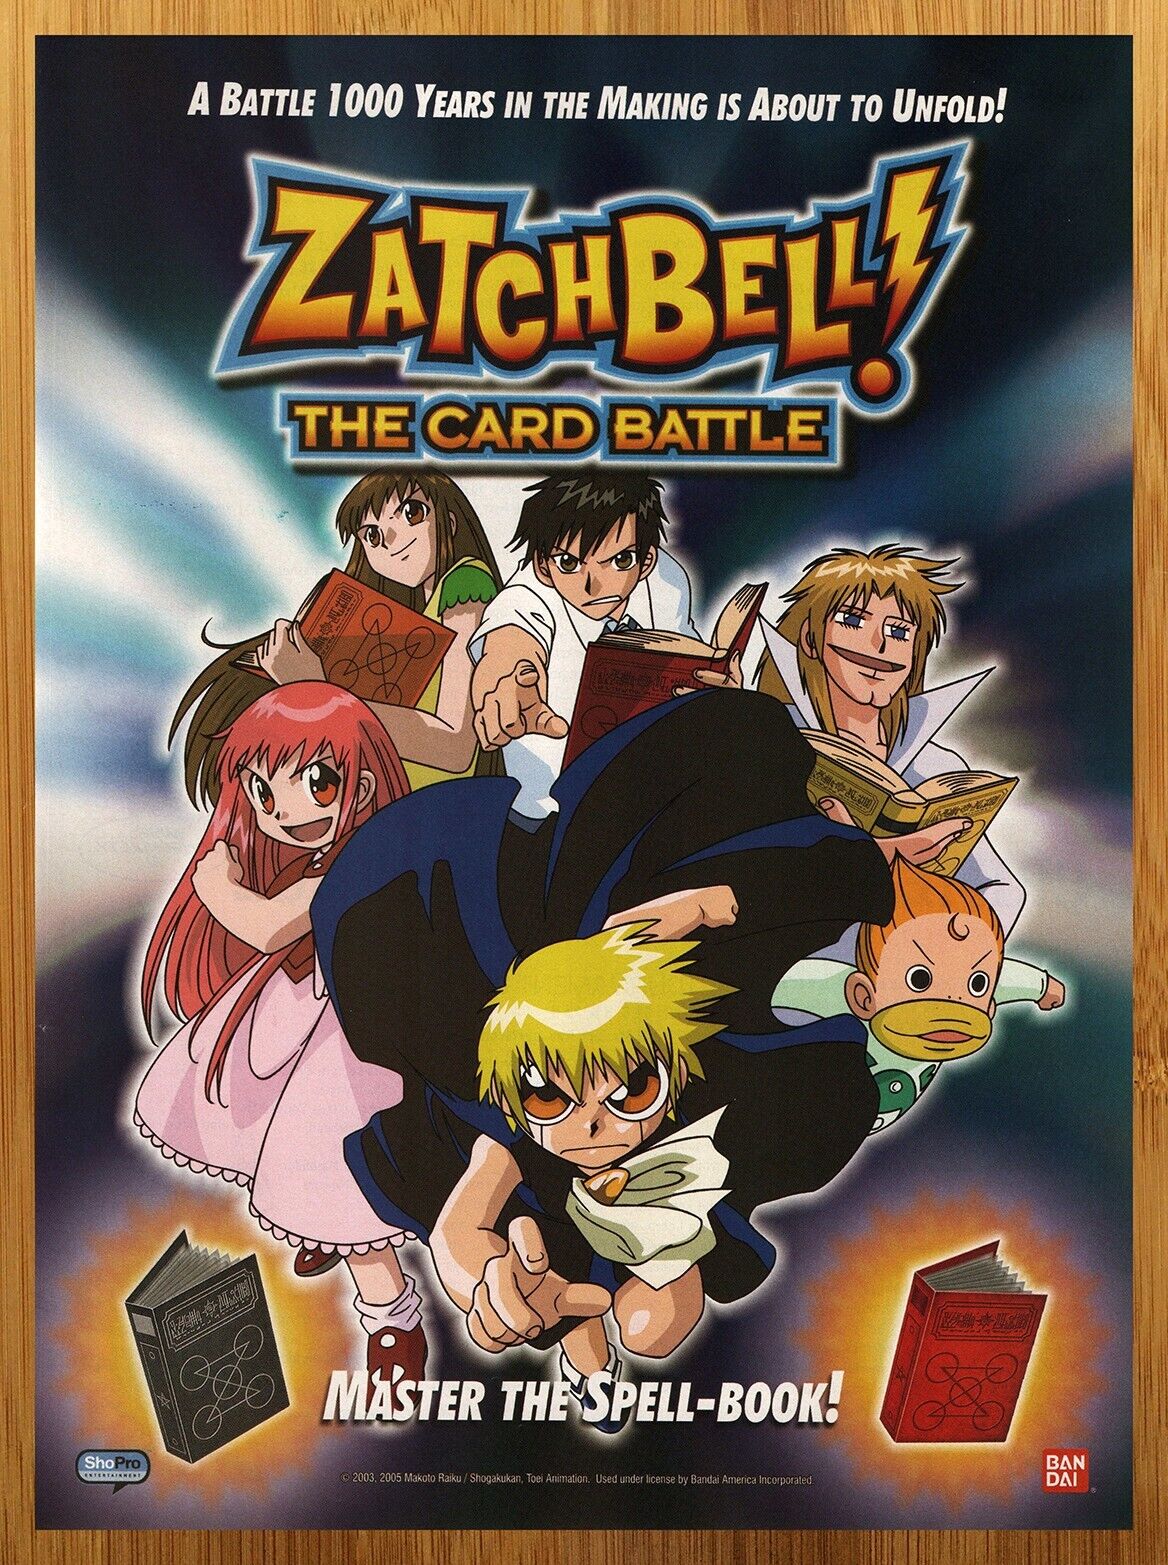 2005 Zatch Bell TCG Trading Card Game Print Ad/Poster Anime Manga Promo Art 00s